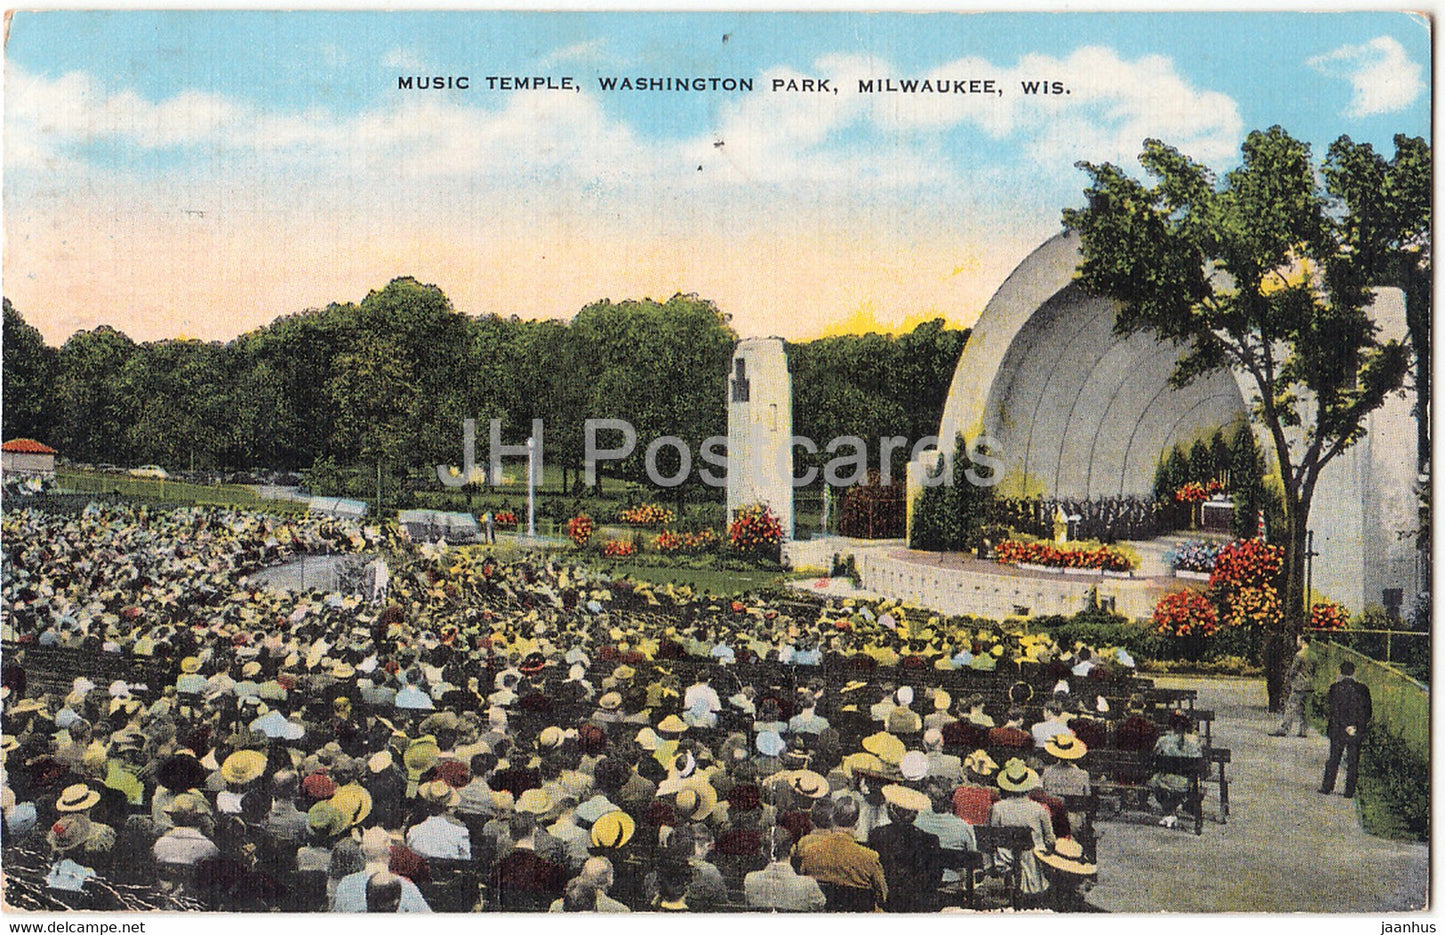 Milwaukee - Music Temple - Washington Park - Wisconsin - old postcard - 1953 - USA - used - JH Postcards